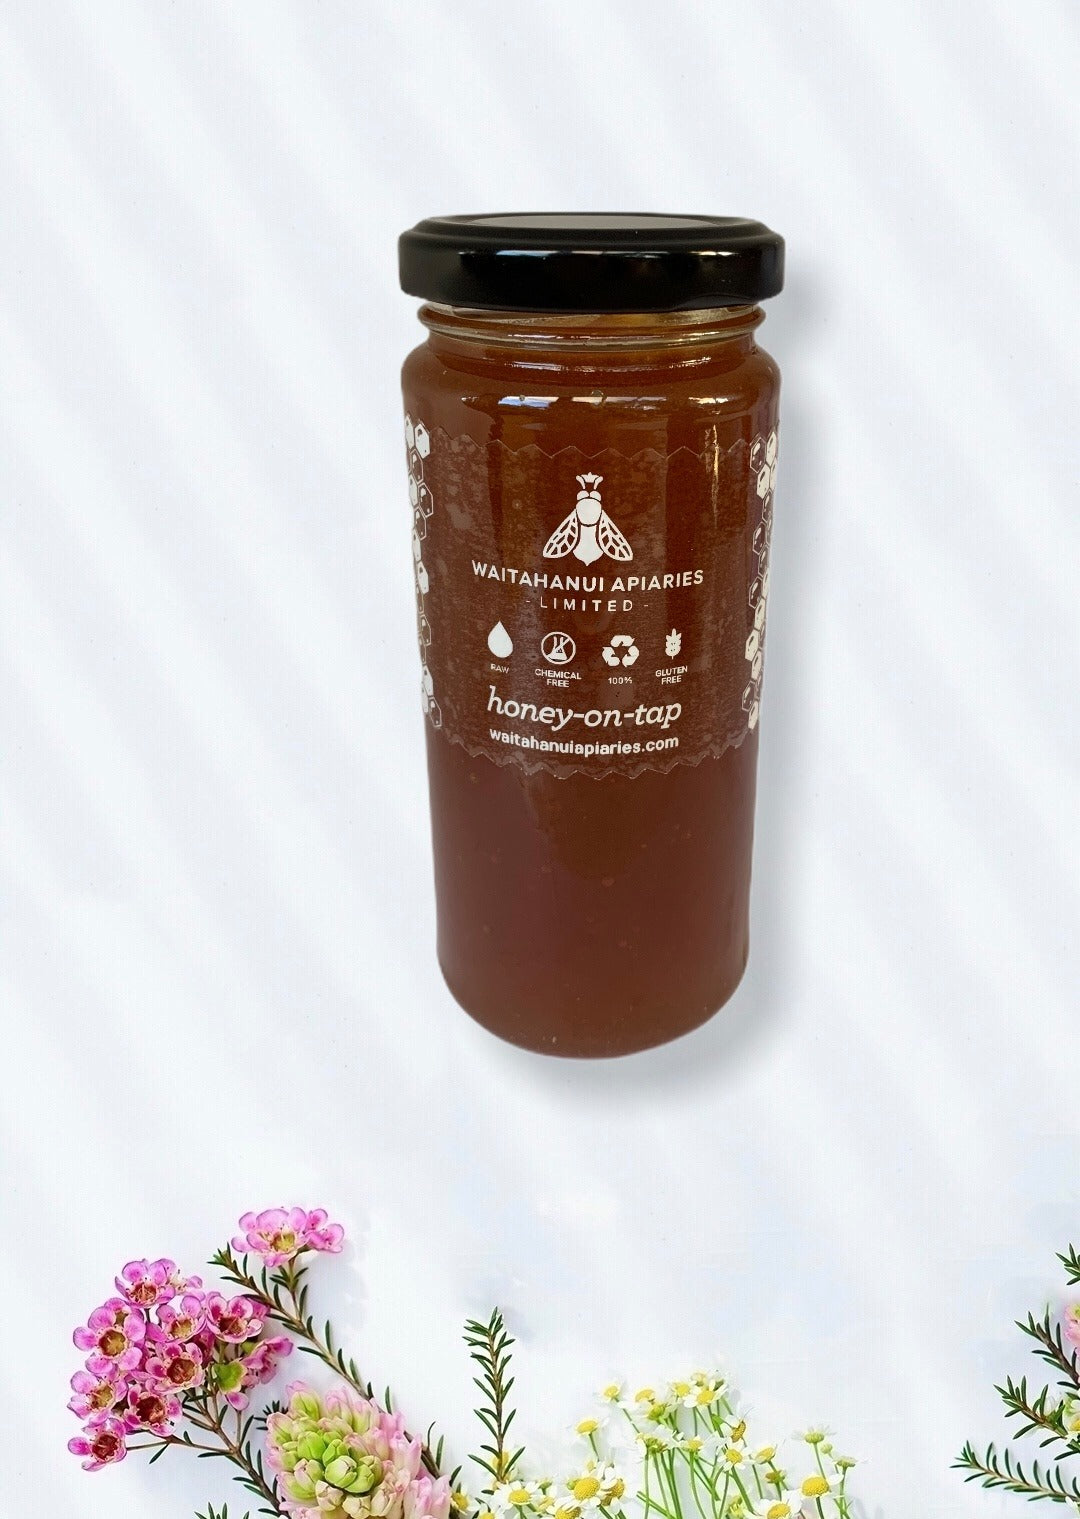 Waitahanui Apiaries - Manuka Honey blend